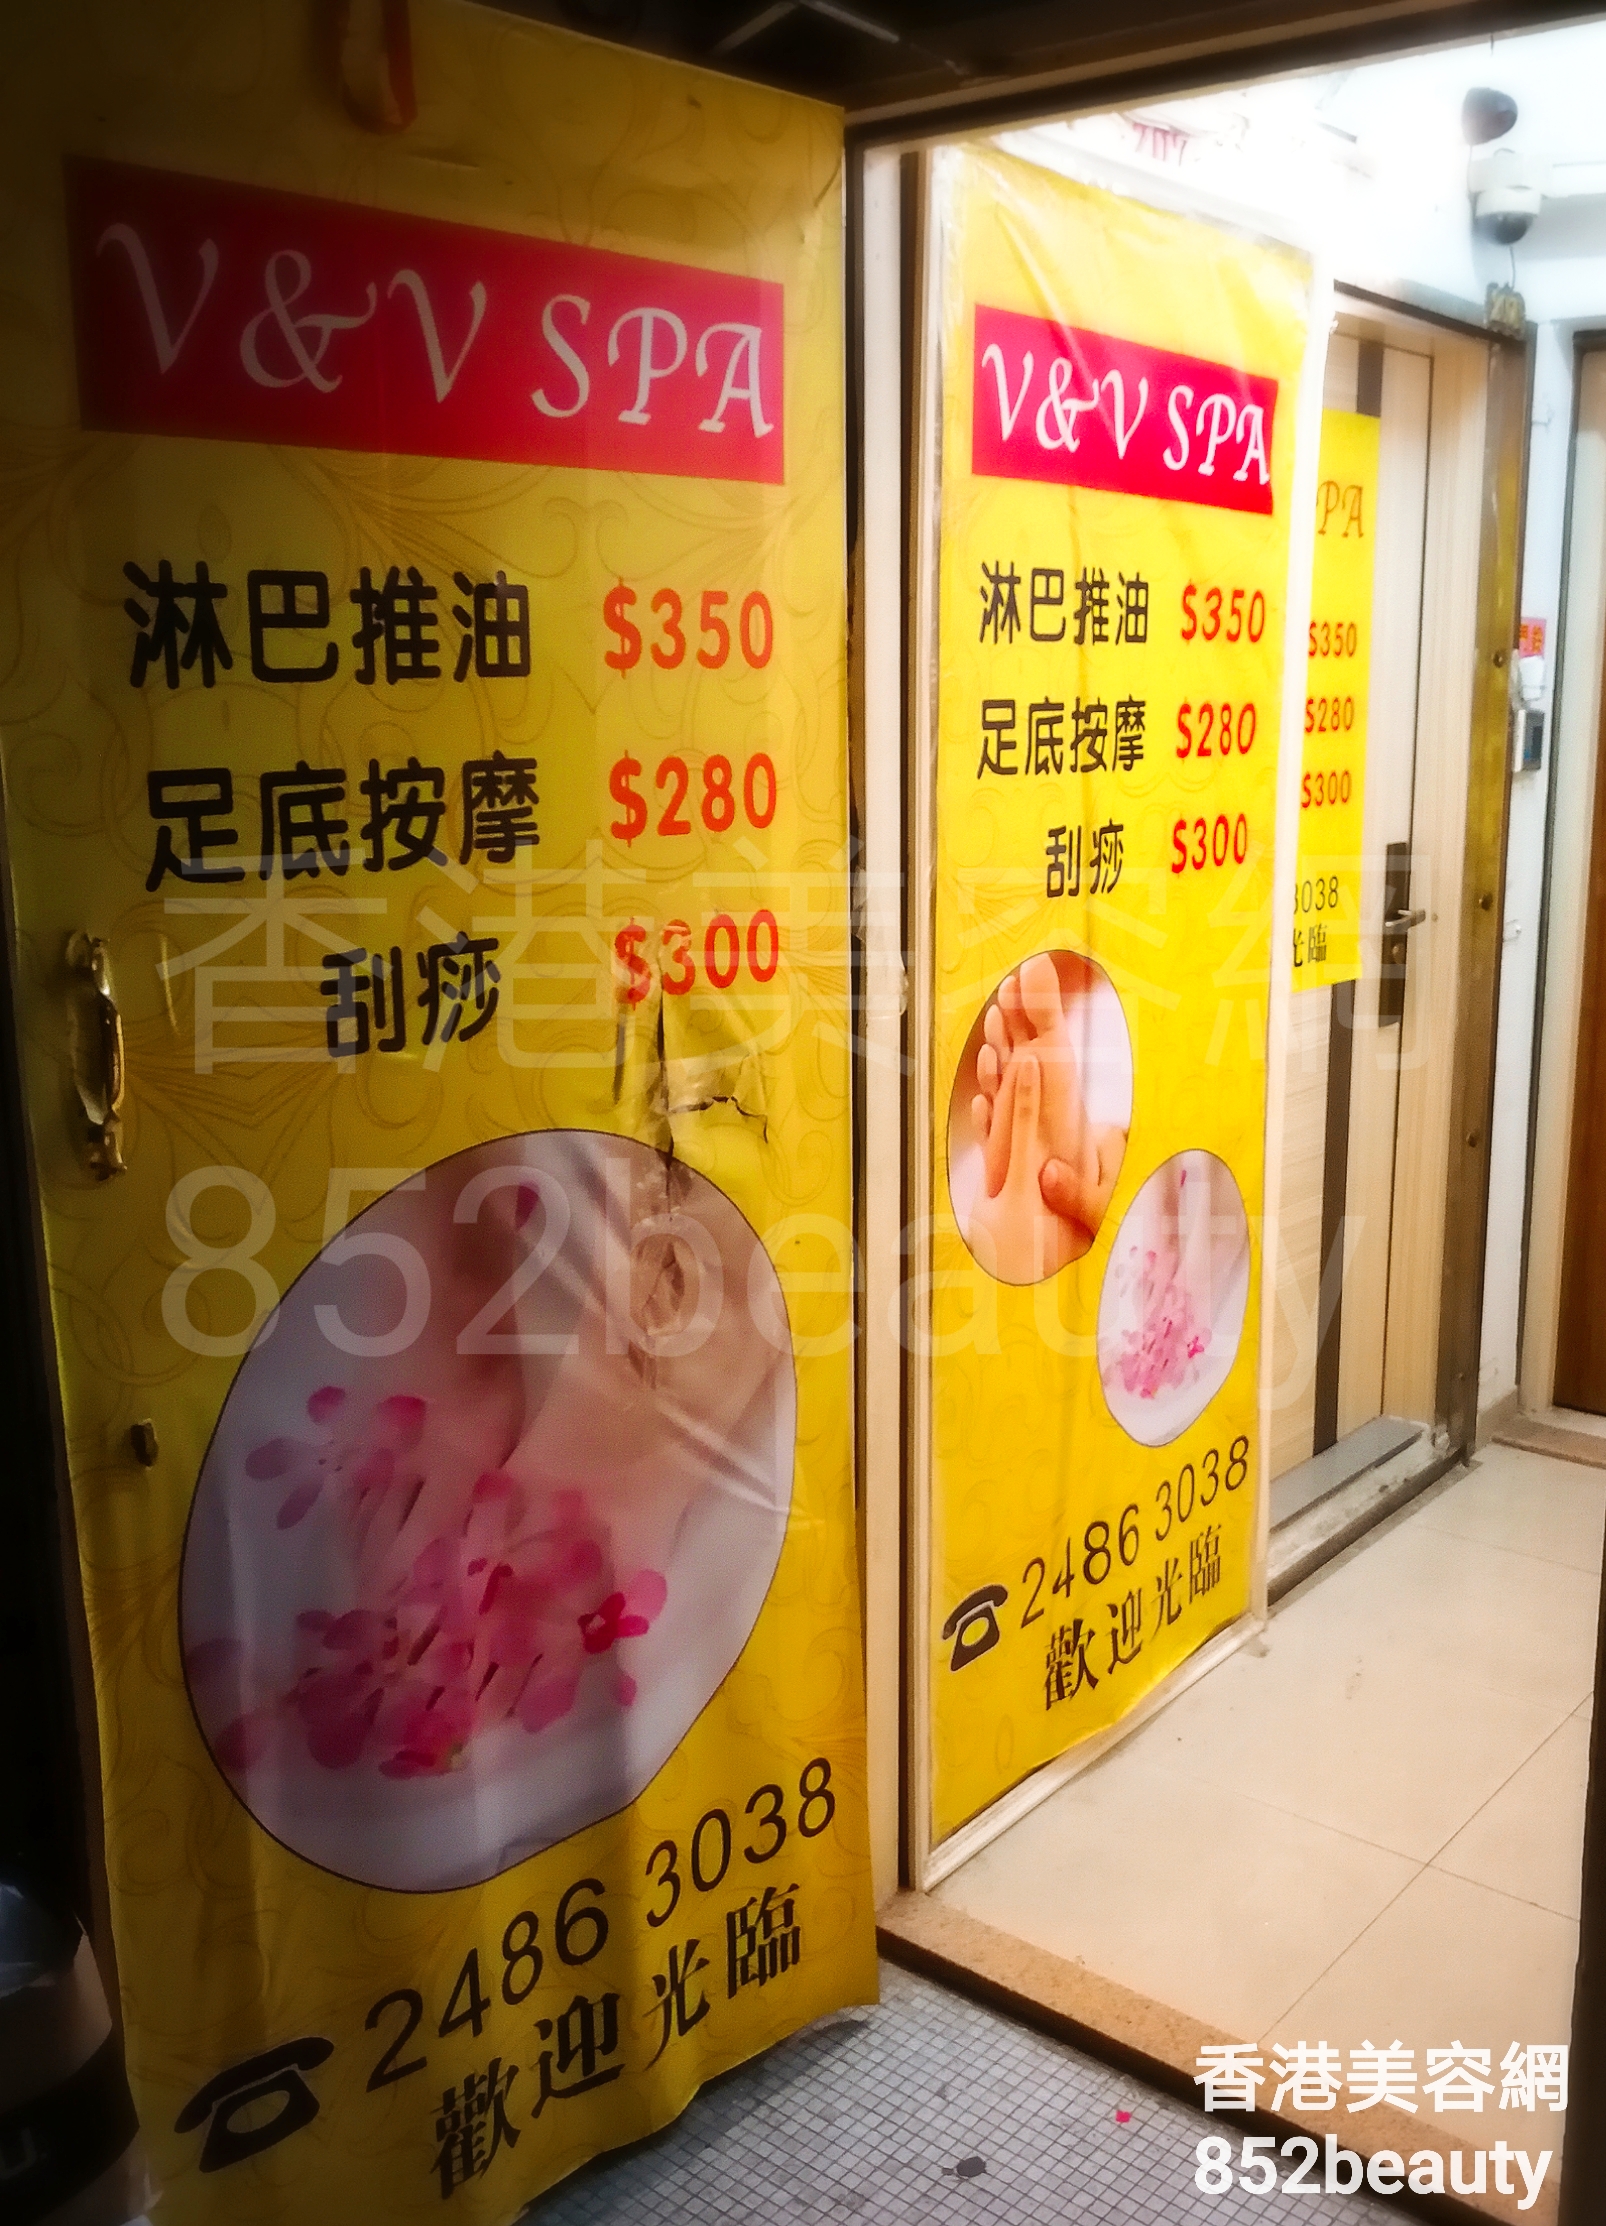 香港美容網 Hong Kong Beauty Salon 美容院 / 美容師: V&V SPA